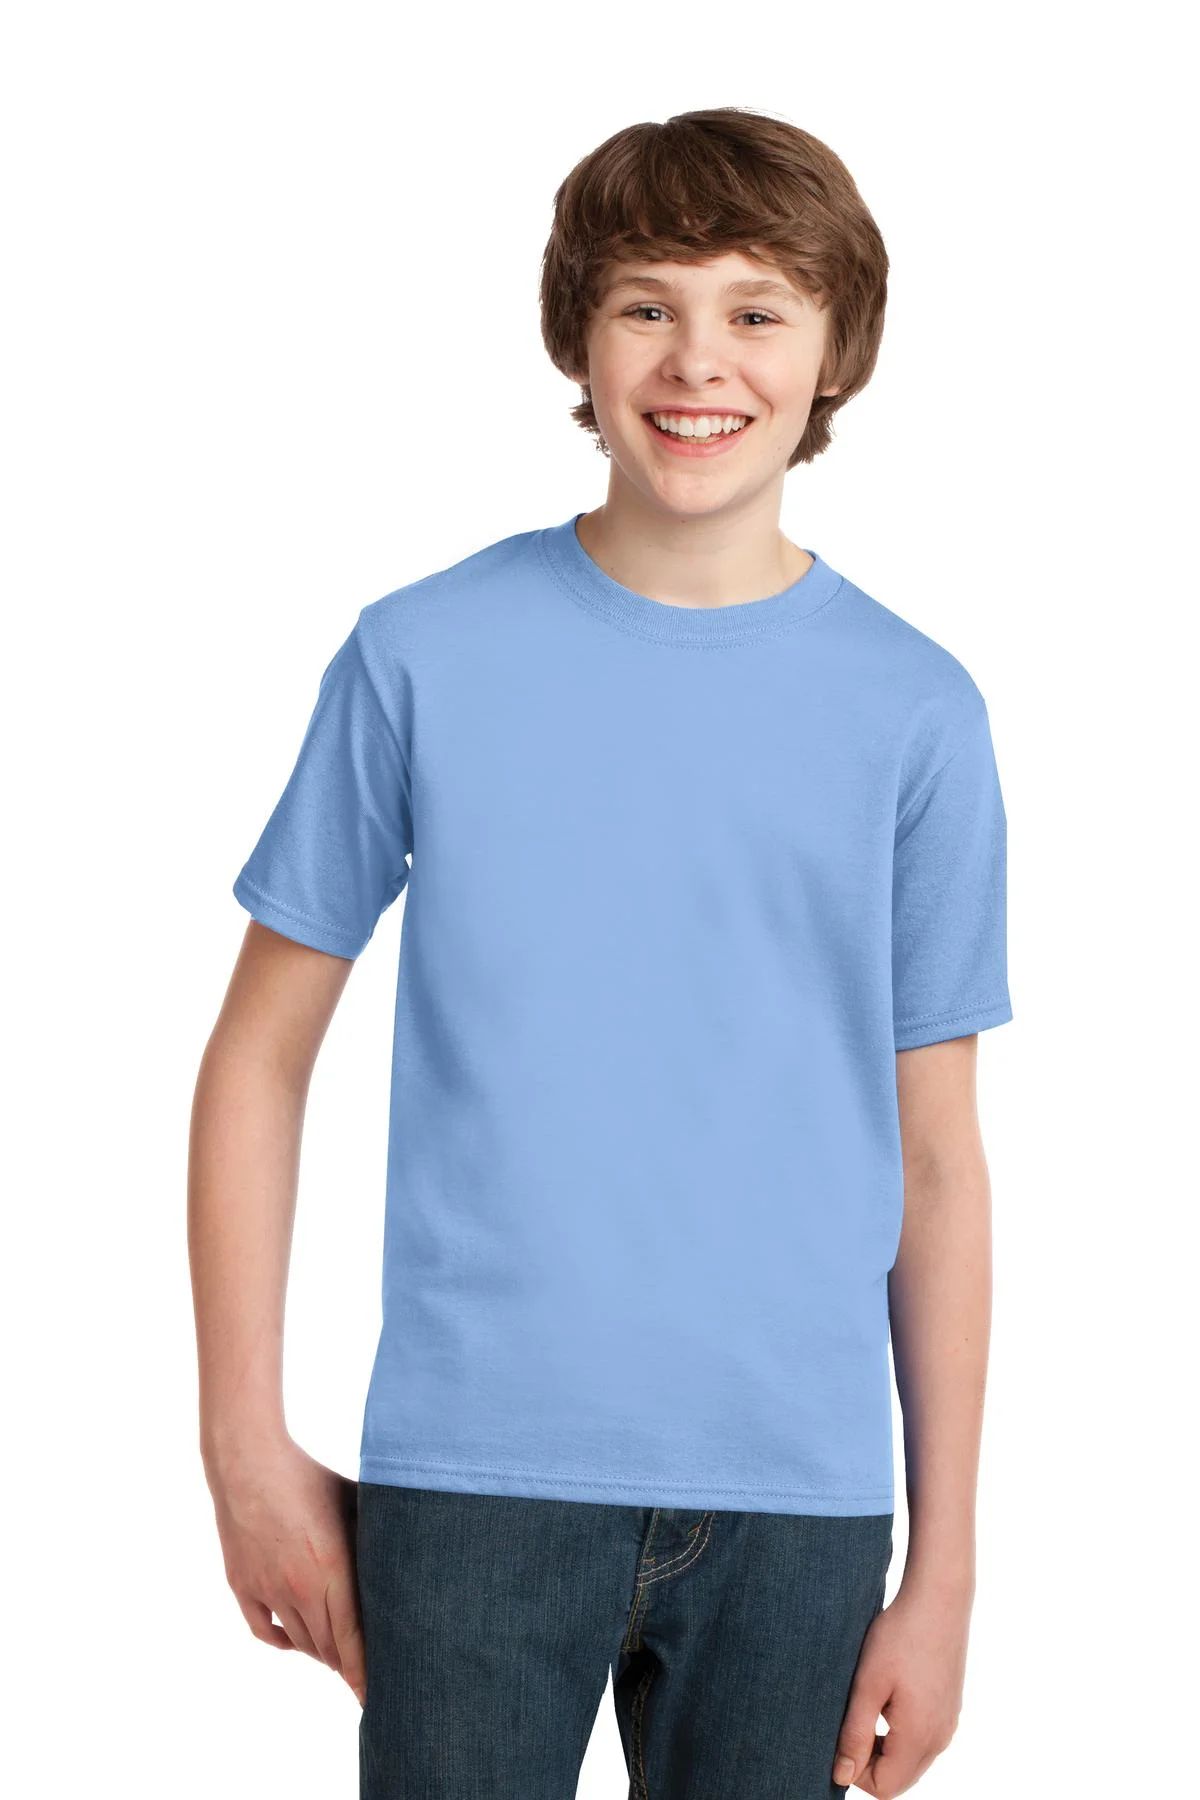 Port & Company Youth Cotton Essential T-Shirt. Light Blue. XL. | Walmart (US)